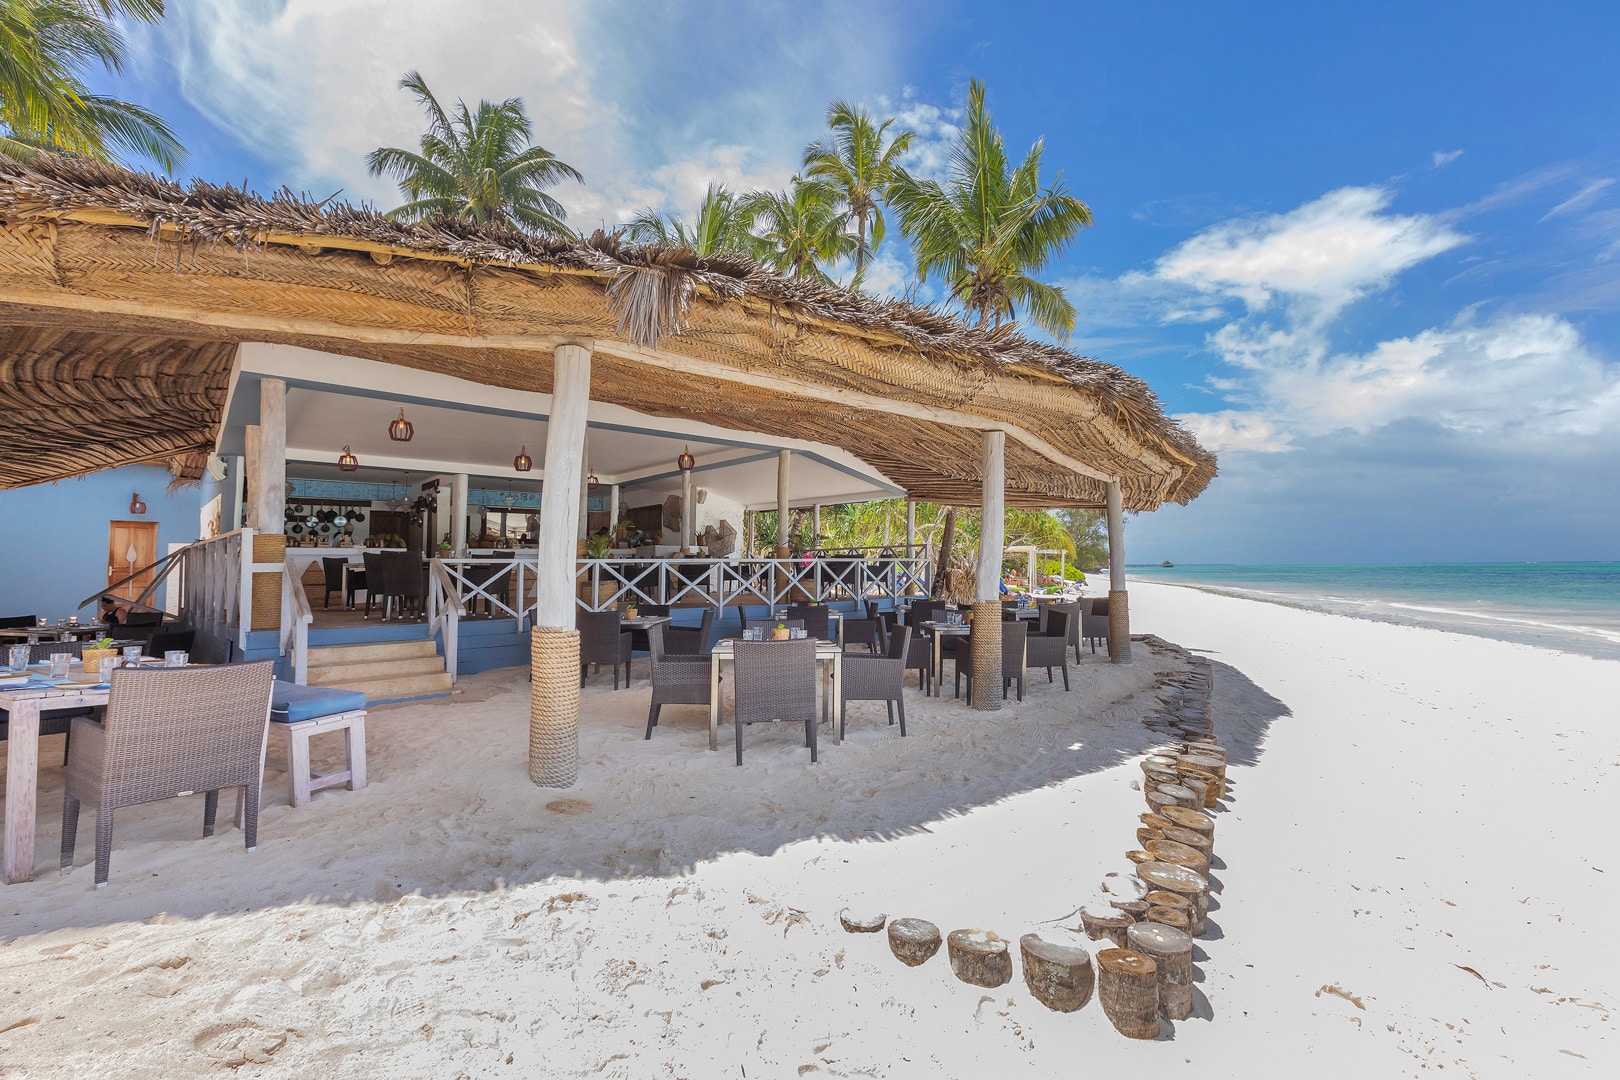 Enjoy quintessential local cuisine at Meliá Zanzibar – one of the top rated Zanzibar resorts with Kids Clubs.